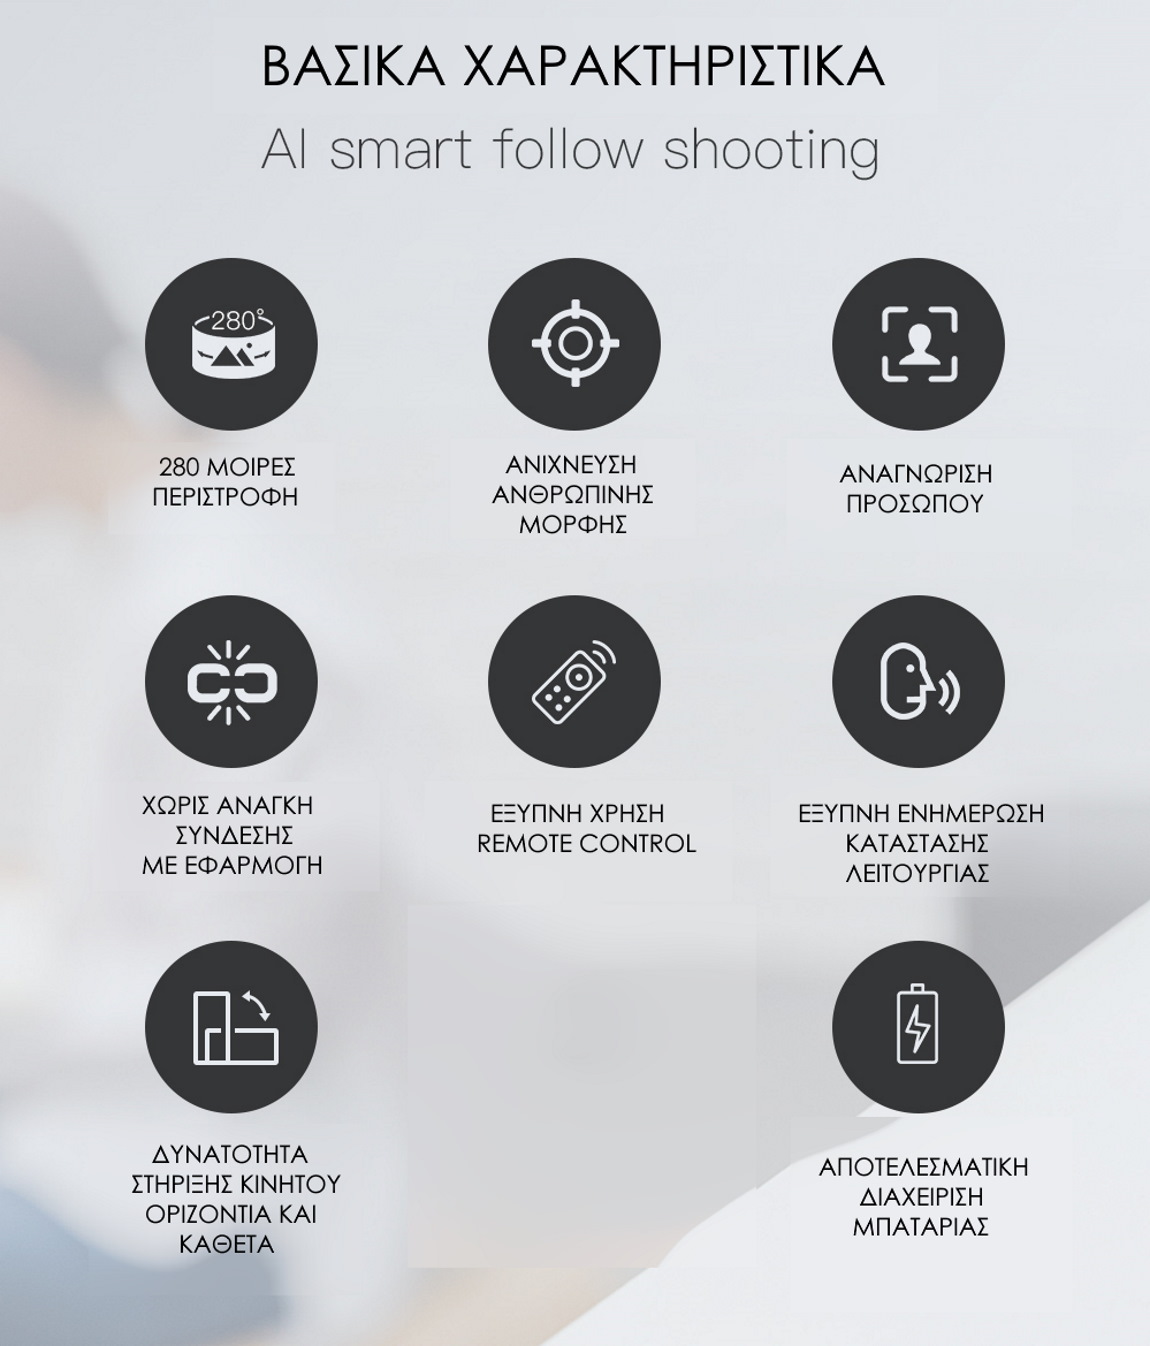 AI Smart Follow Shooting βασικά χαρακτηριστικά